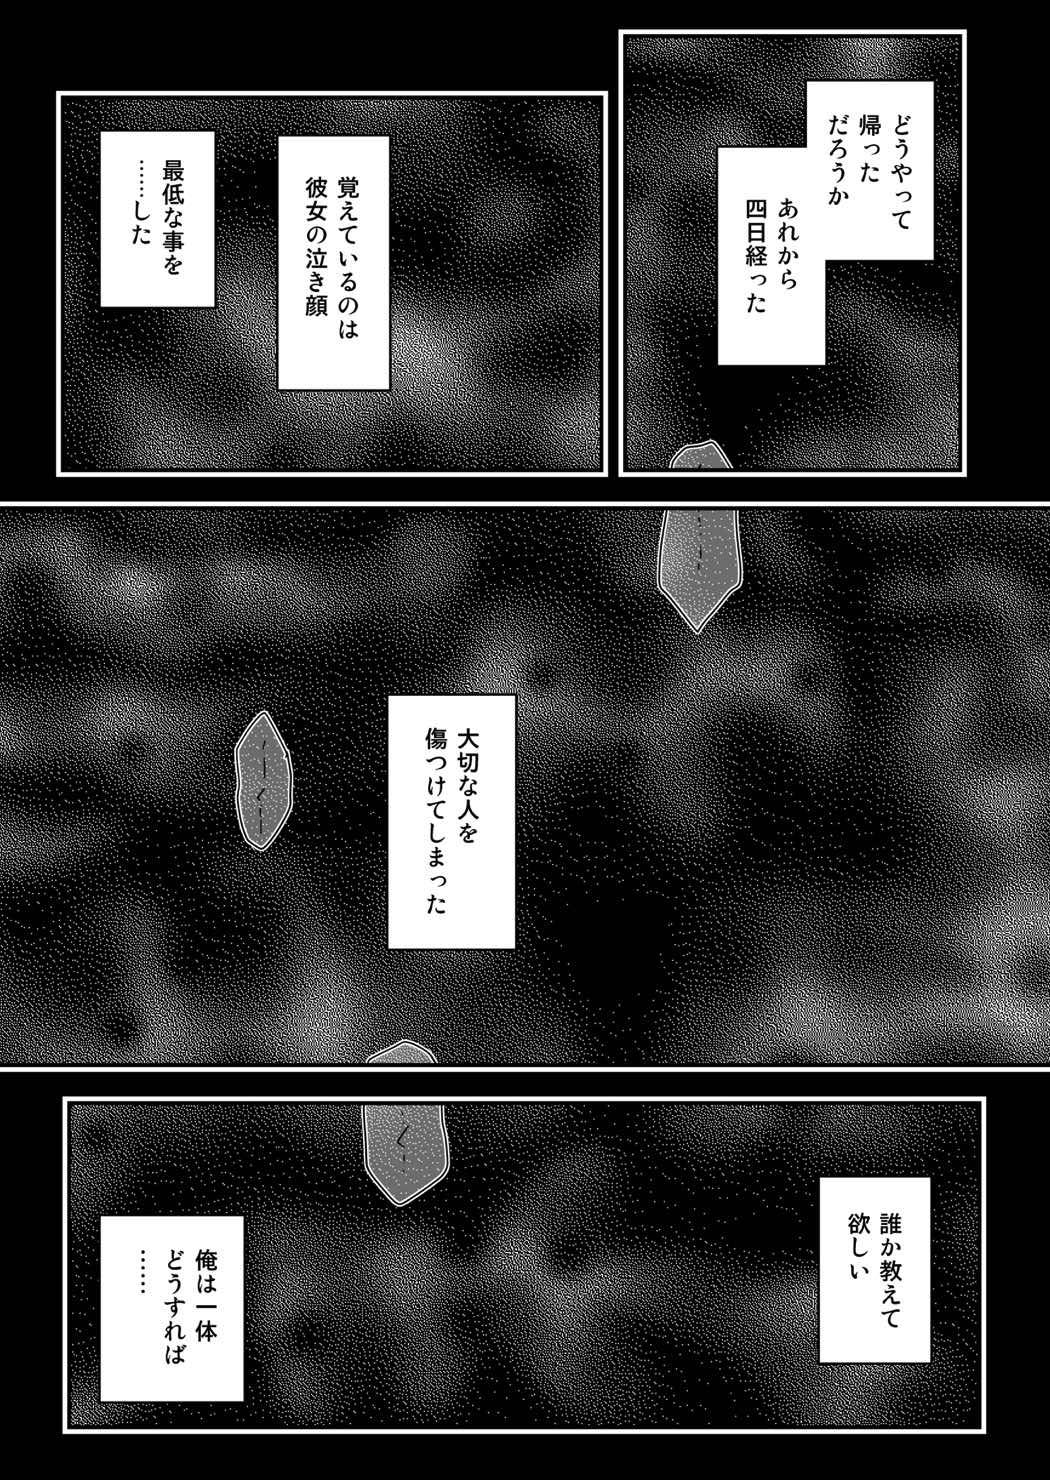 Free Fuck ＊＊＊＊＊＊＊＊＊! 2 - Seitokai yakuindomo Club - Page 2